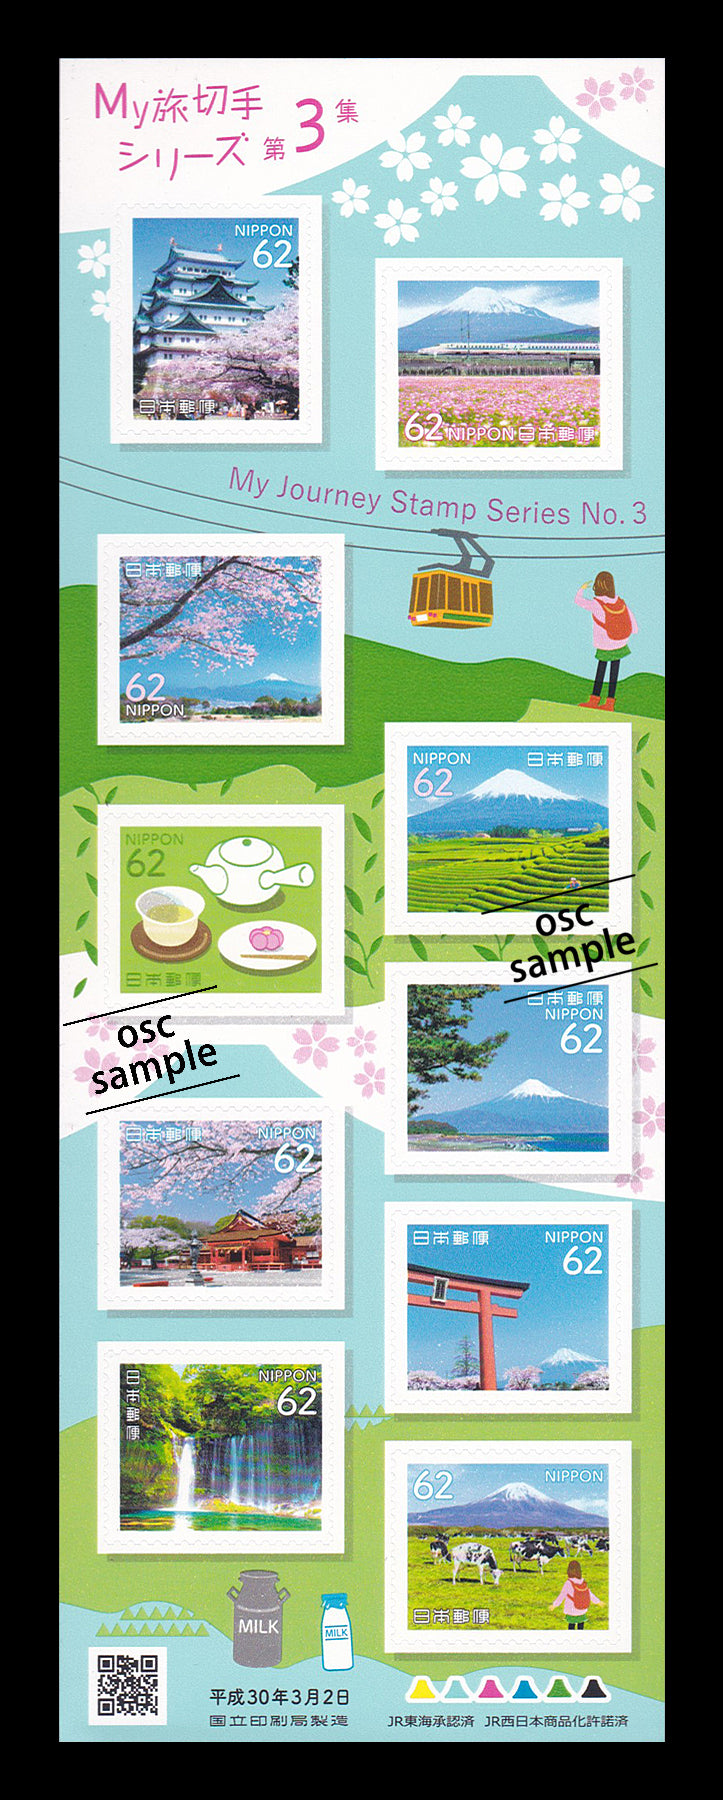 Hakone (My Journey Stamp Series No.3) 箱根 (62 yen)